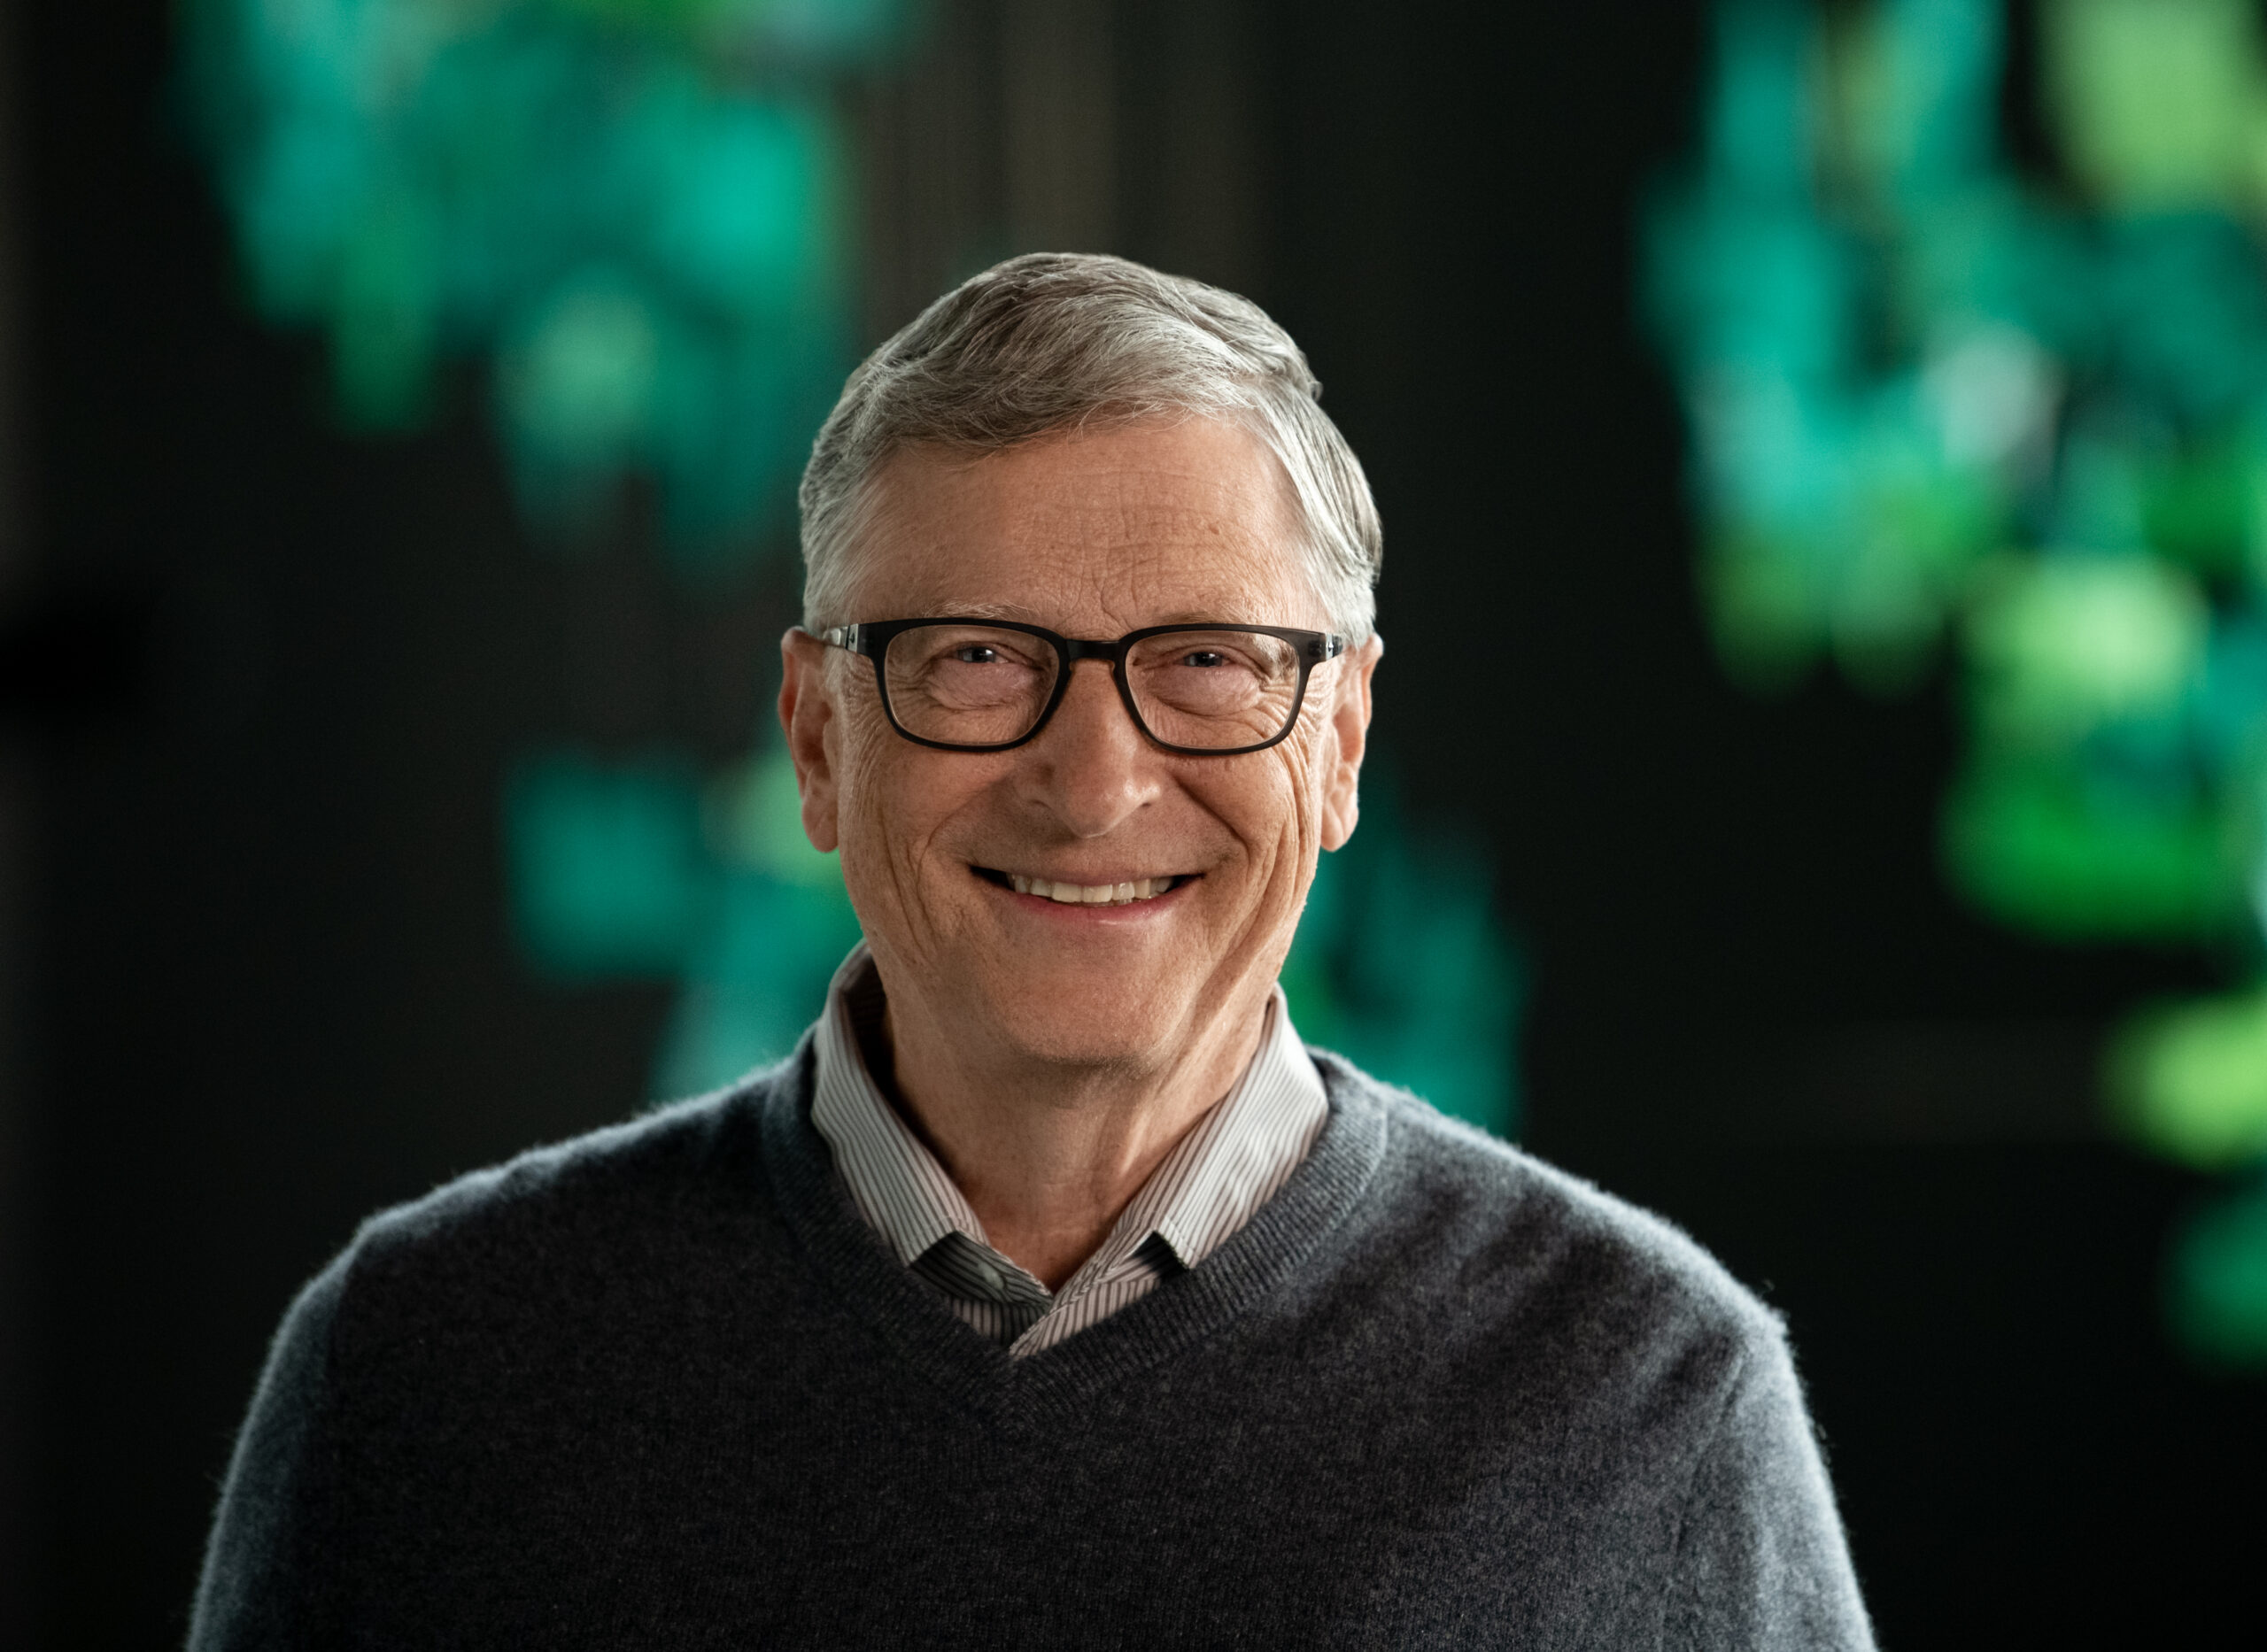 Bill Gates to visit Nigeria